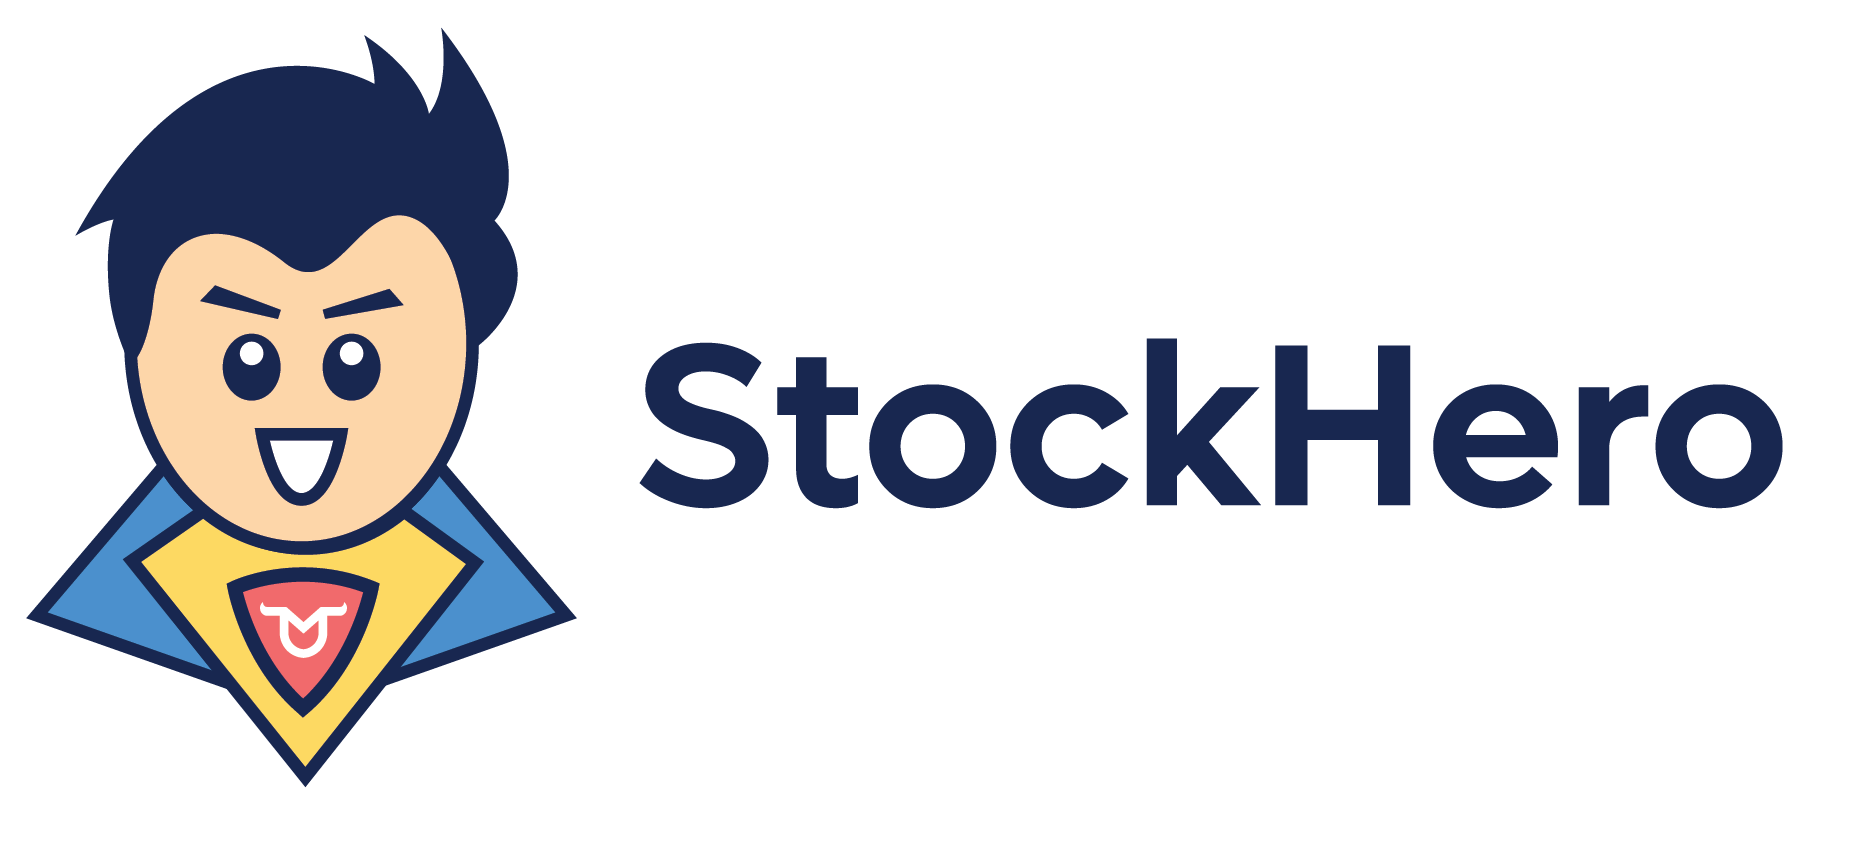 StockHero logo